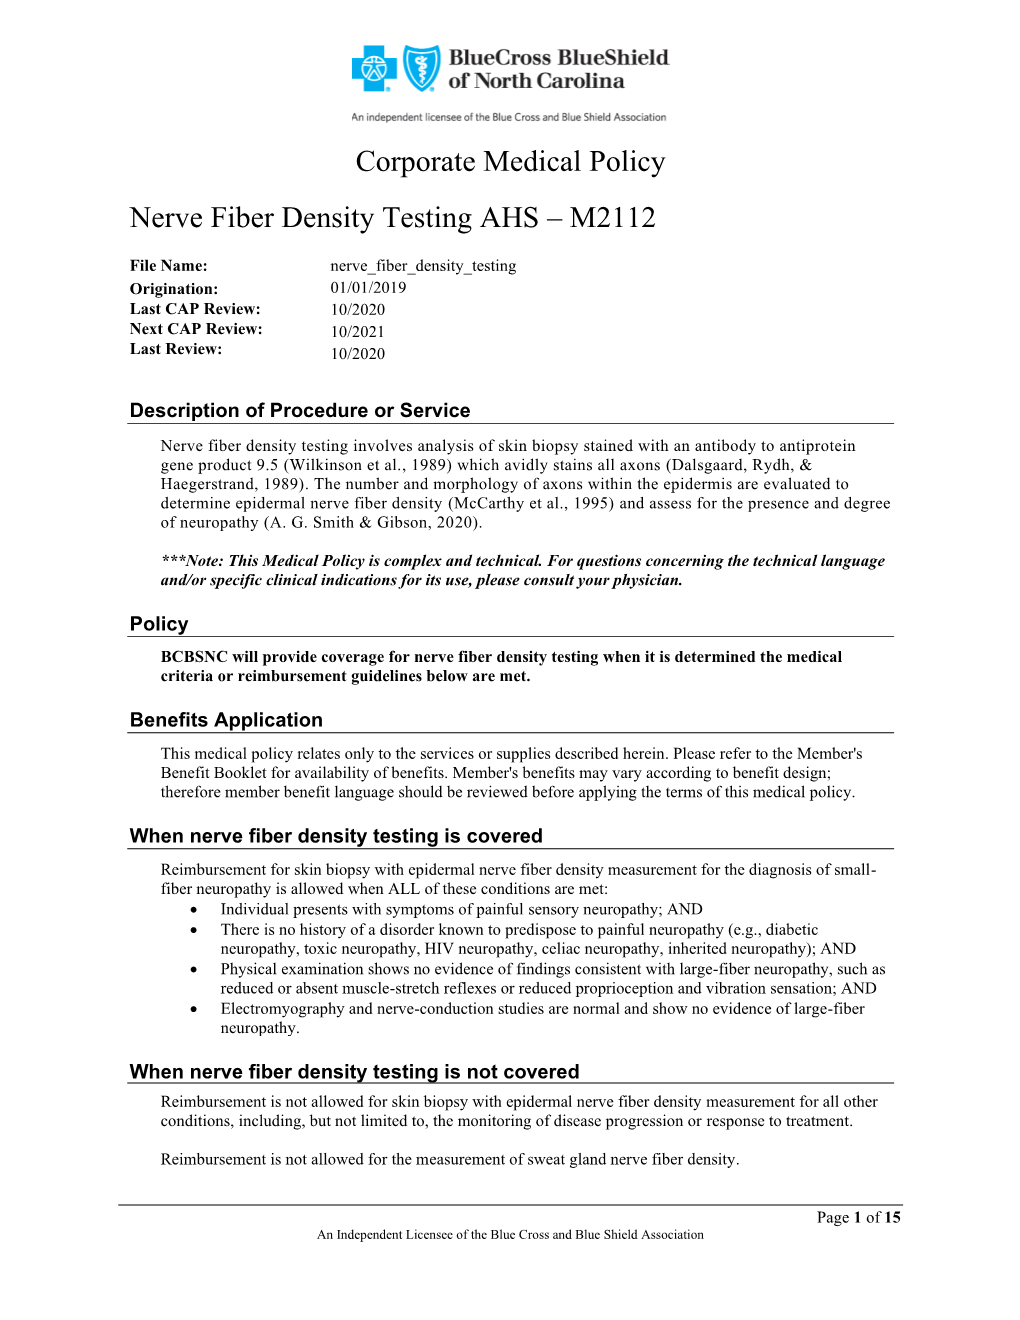 Nerve Fiber Density Testing AHS – M2112